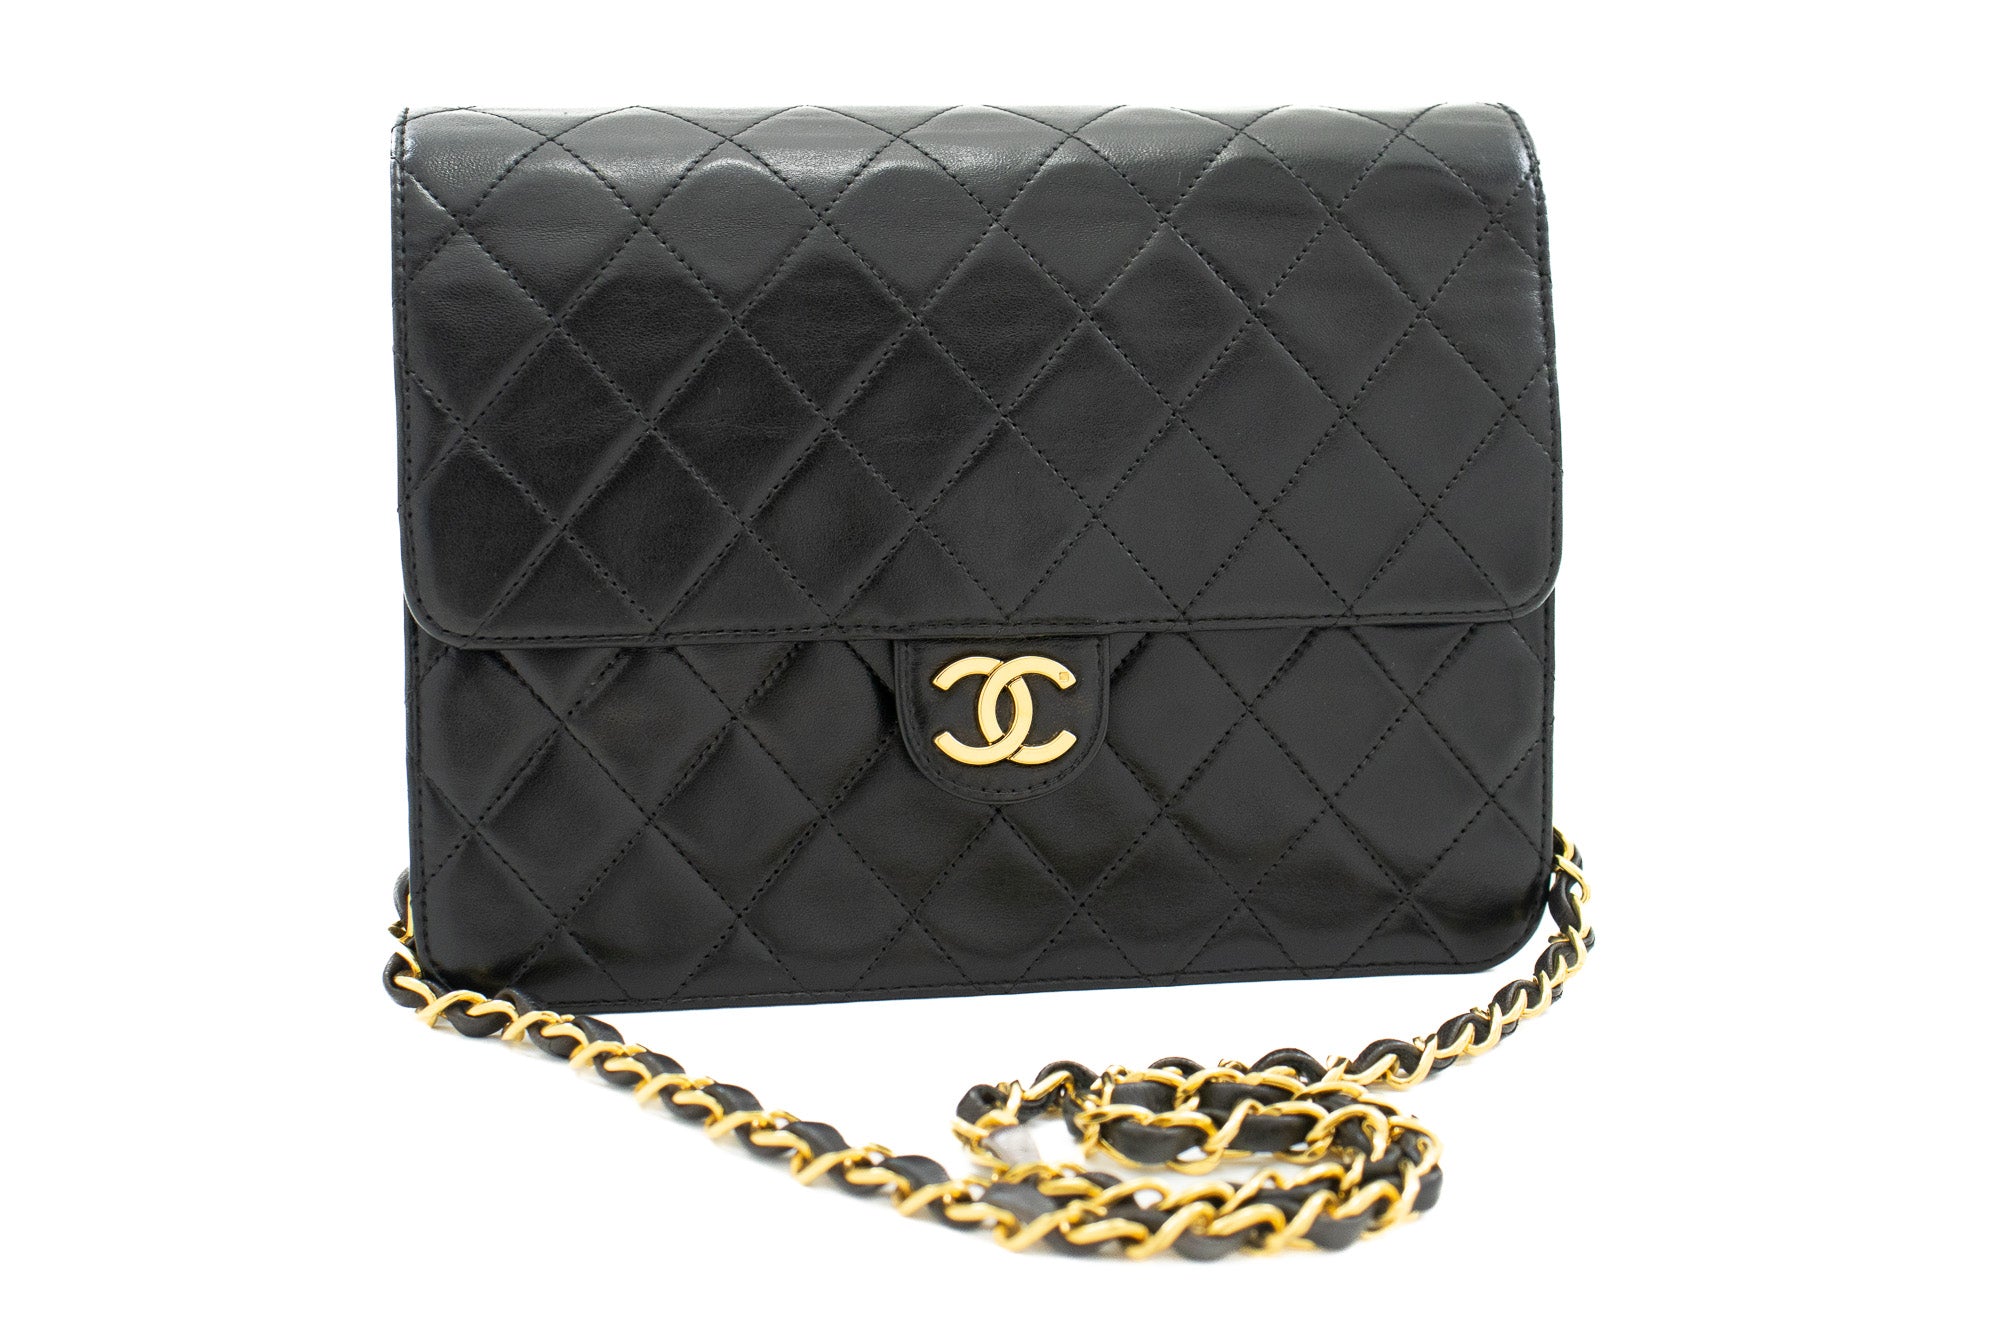 Chanel Black Small Single Flap Bag